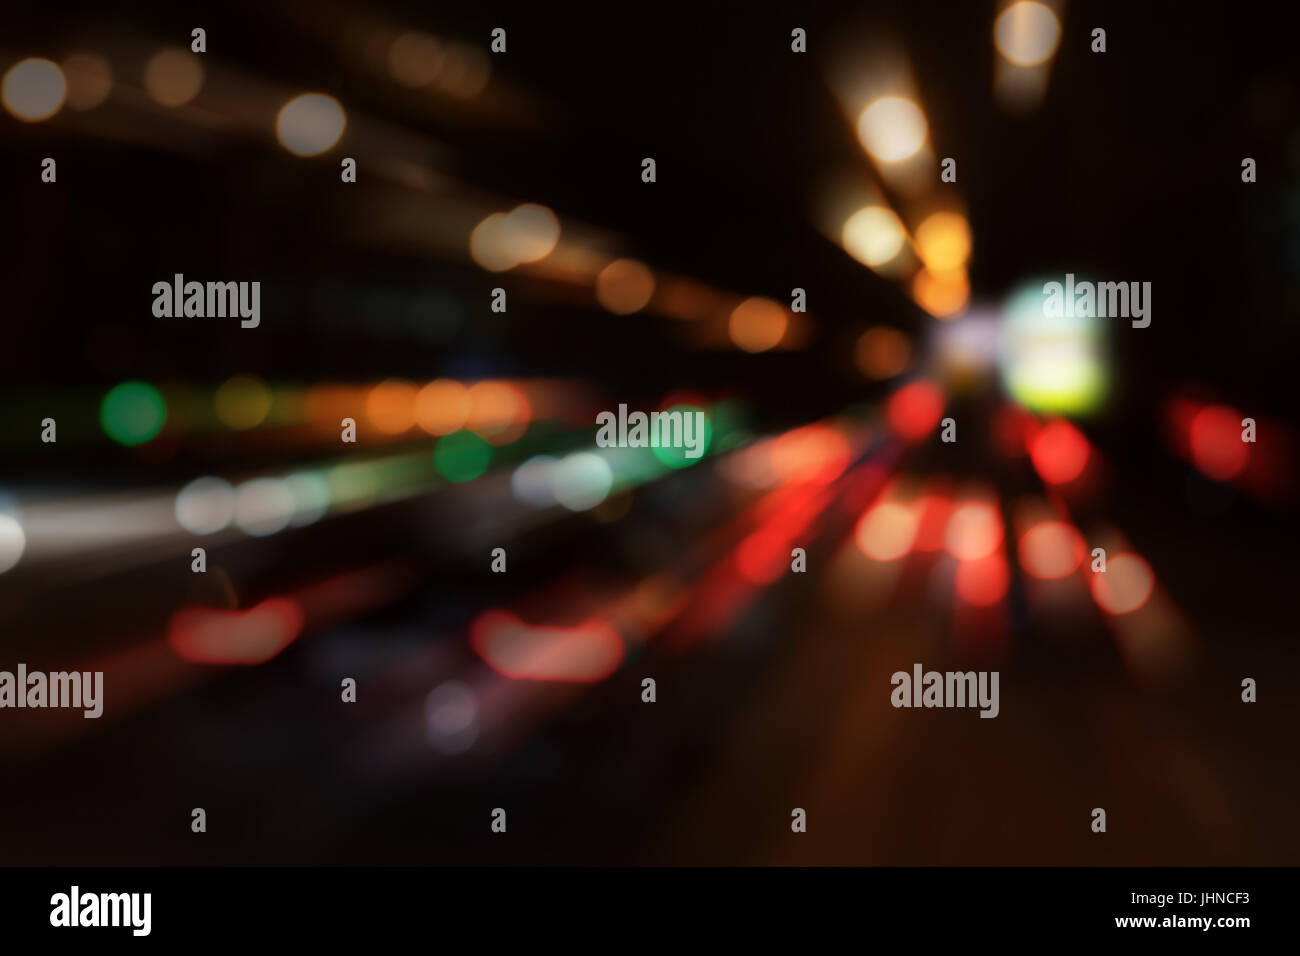 Blur city lights Stock Photo